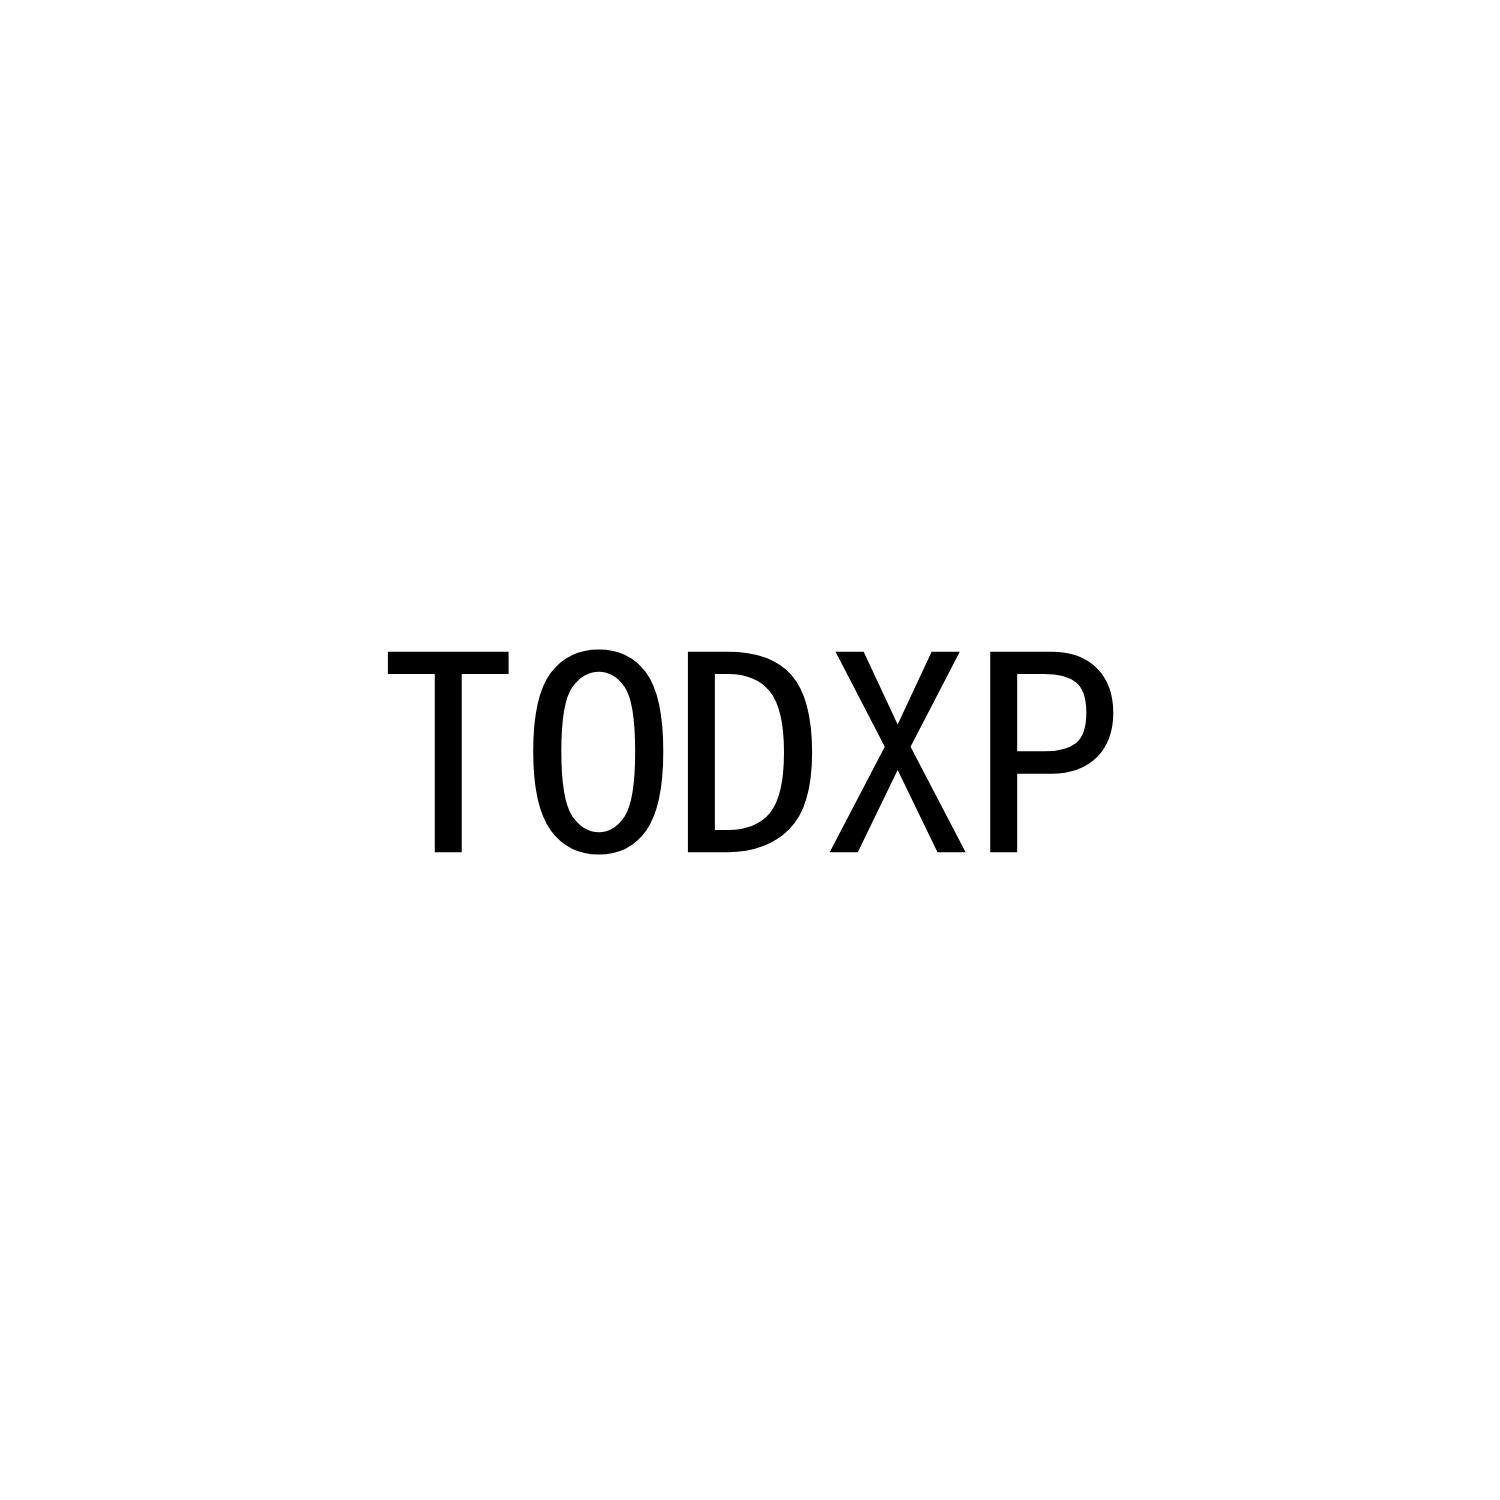 TODXP